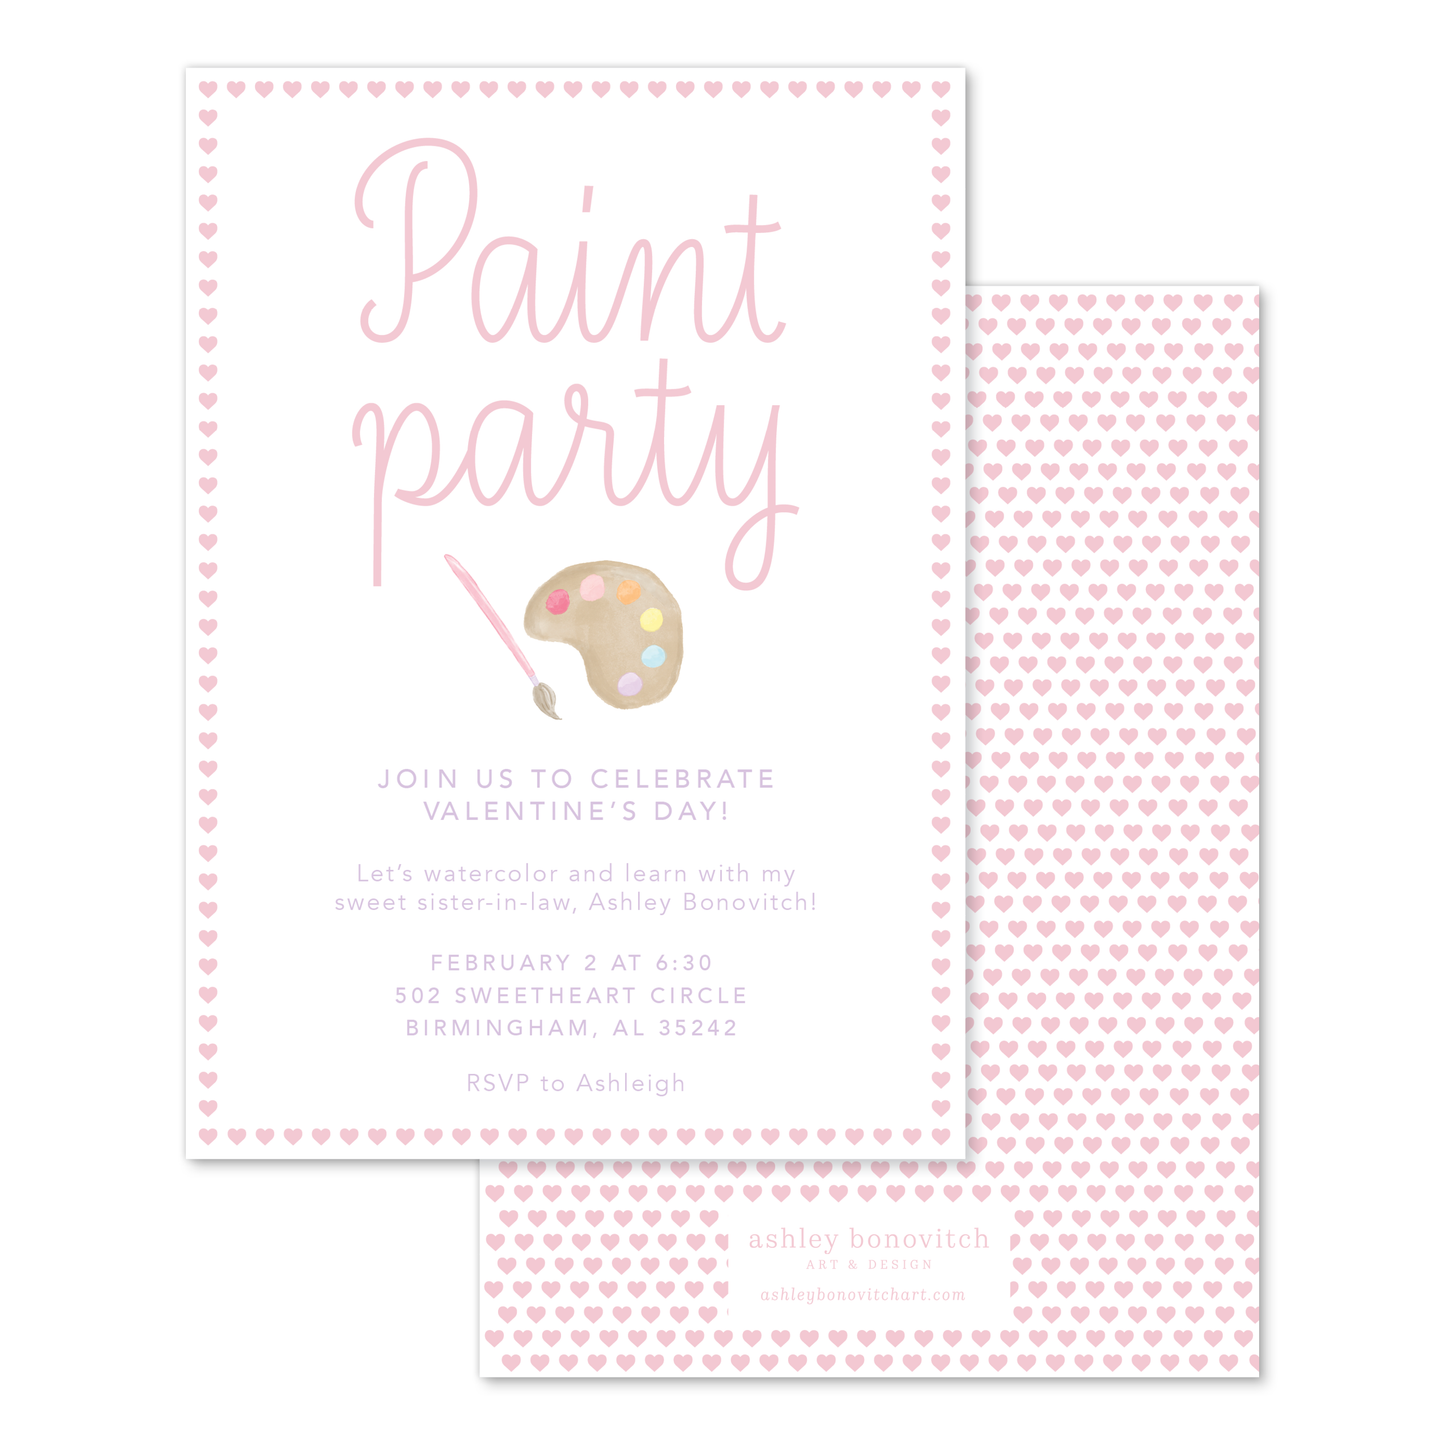 Paint Party Invitation